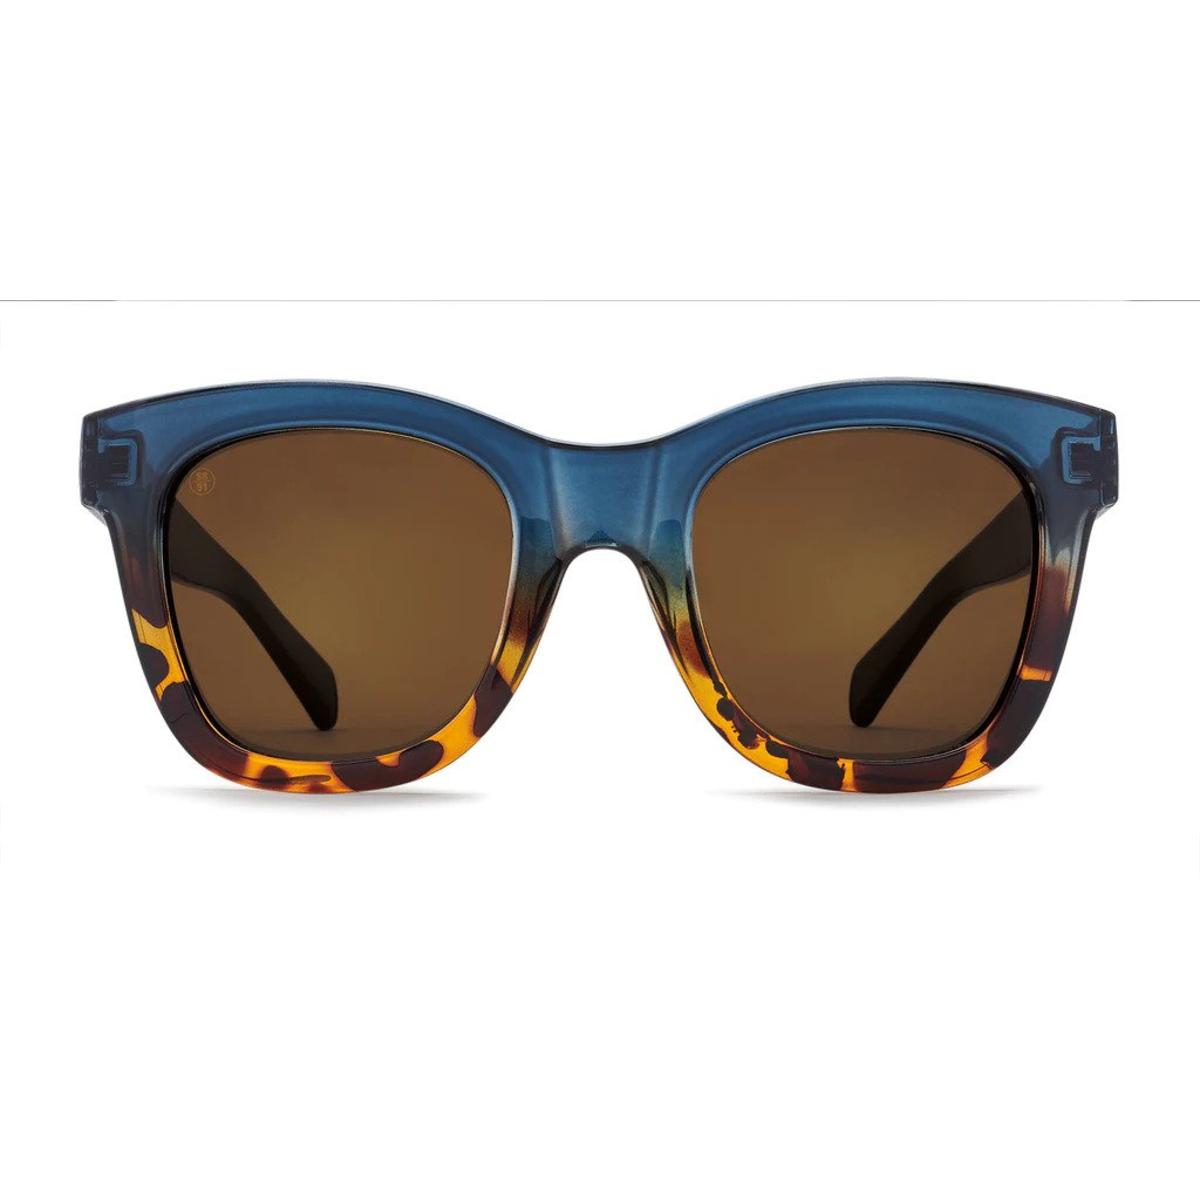 Kaenon Lido Polarized Women's Sunglasses